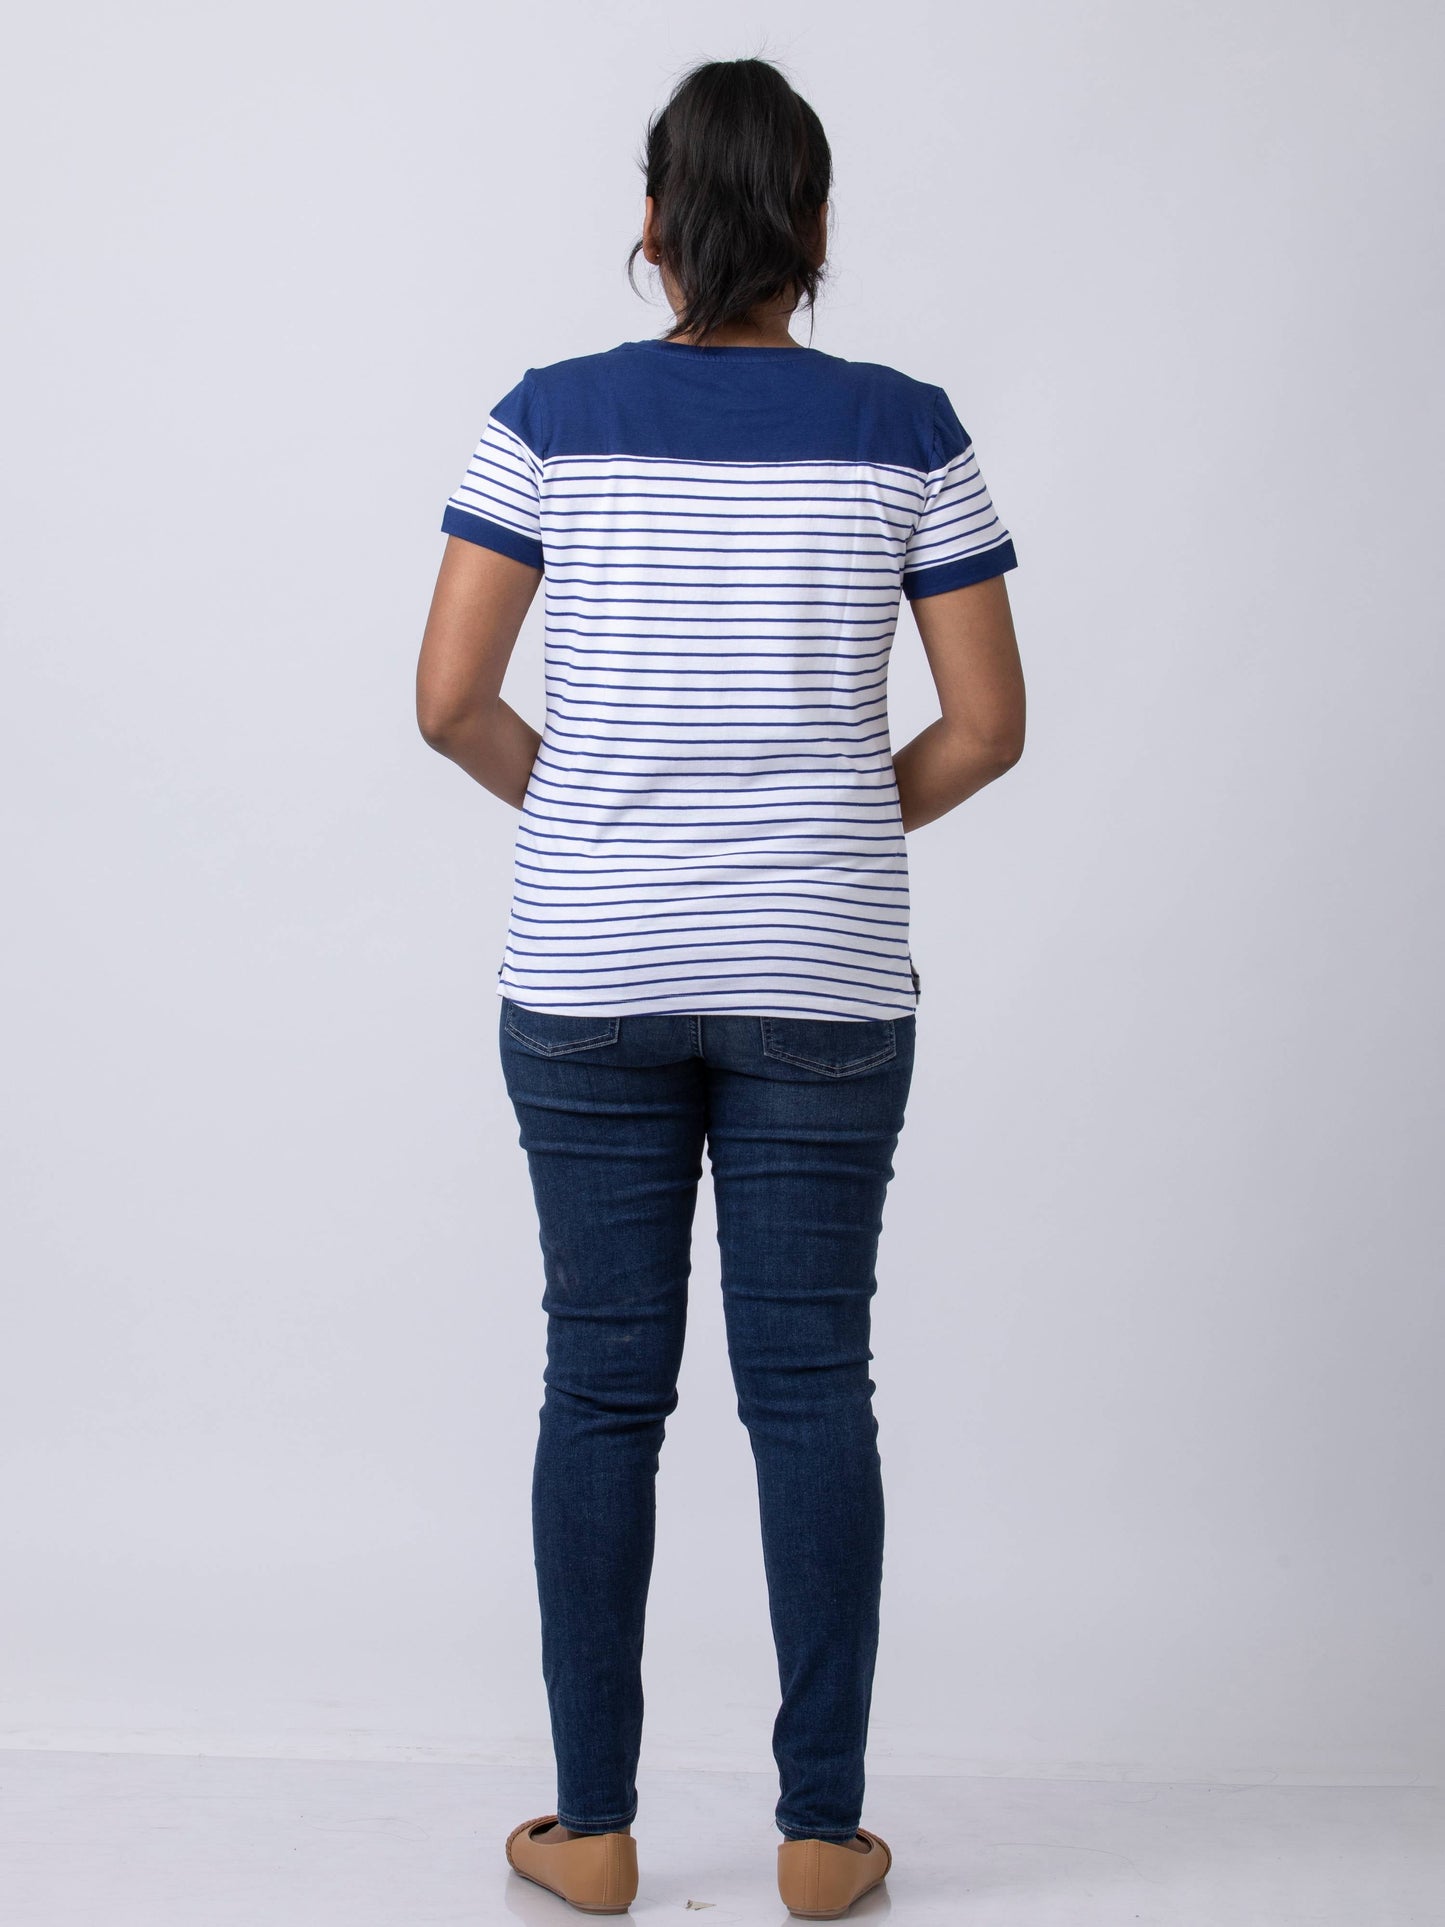 Soft & Premium Women's Printed Cotton T-Shirt - White/Navy